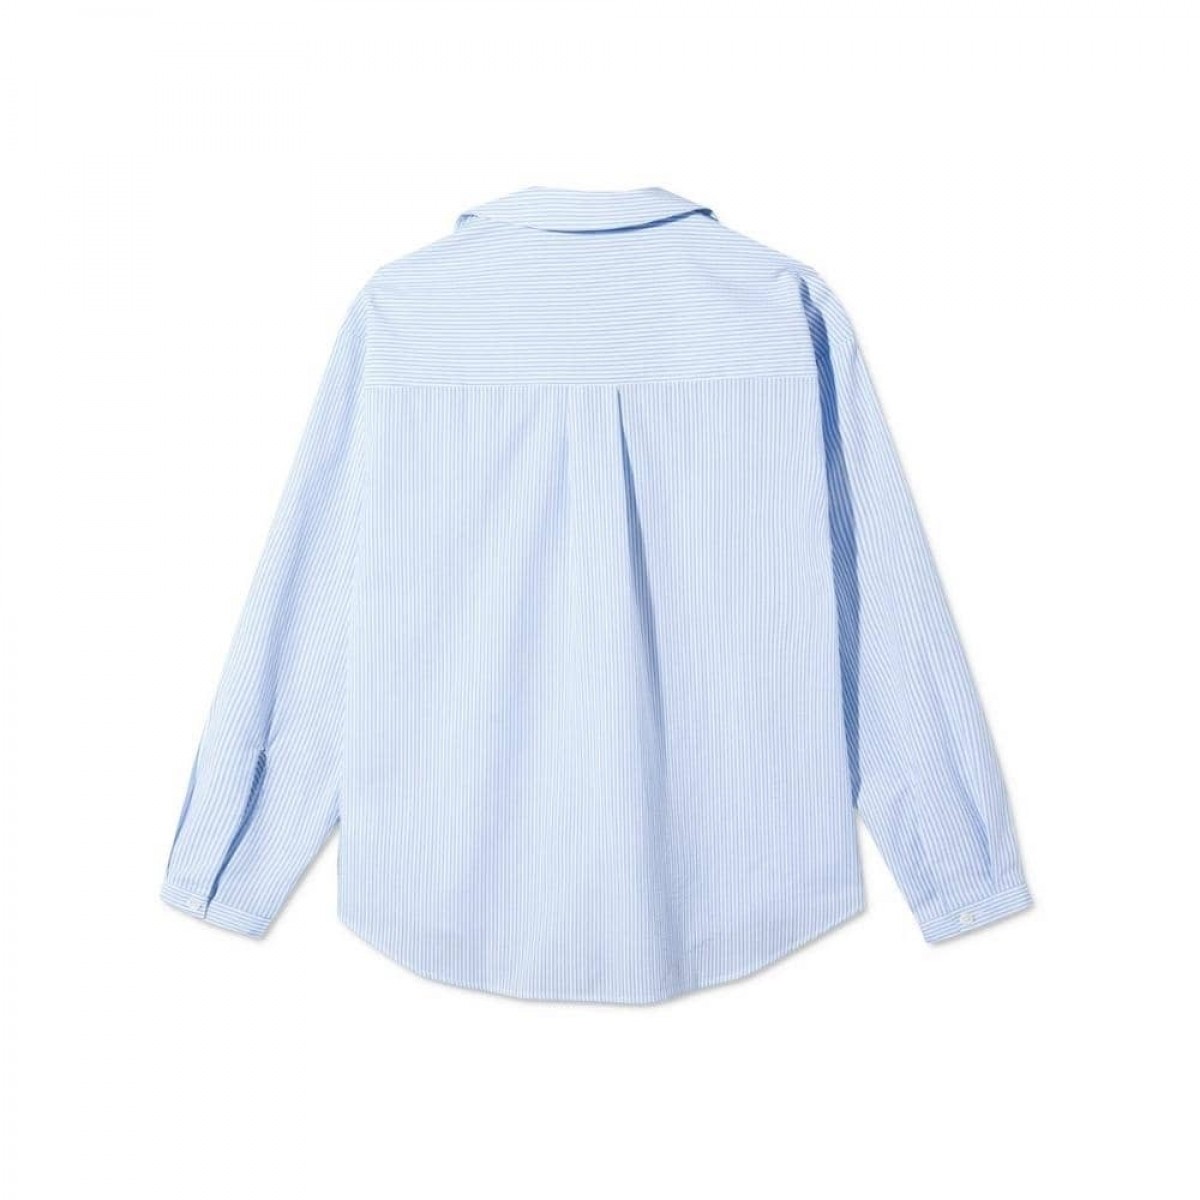 safa shirt - light blue / white stripe - ryggen 